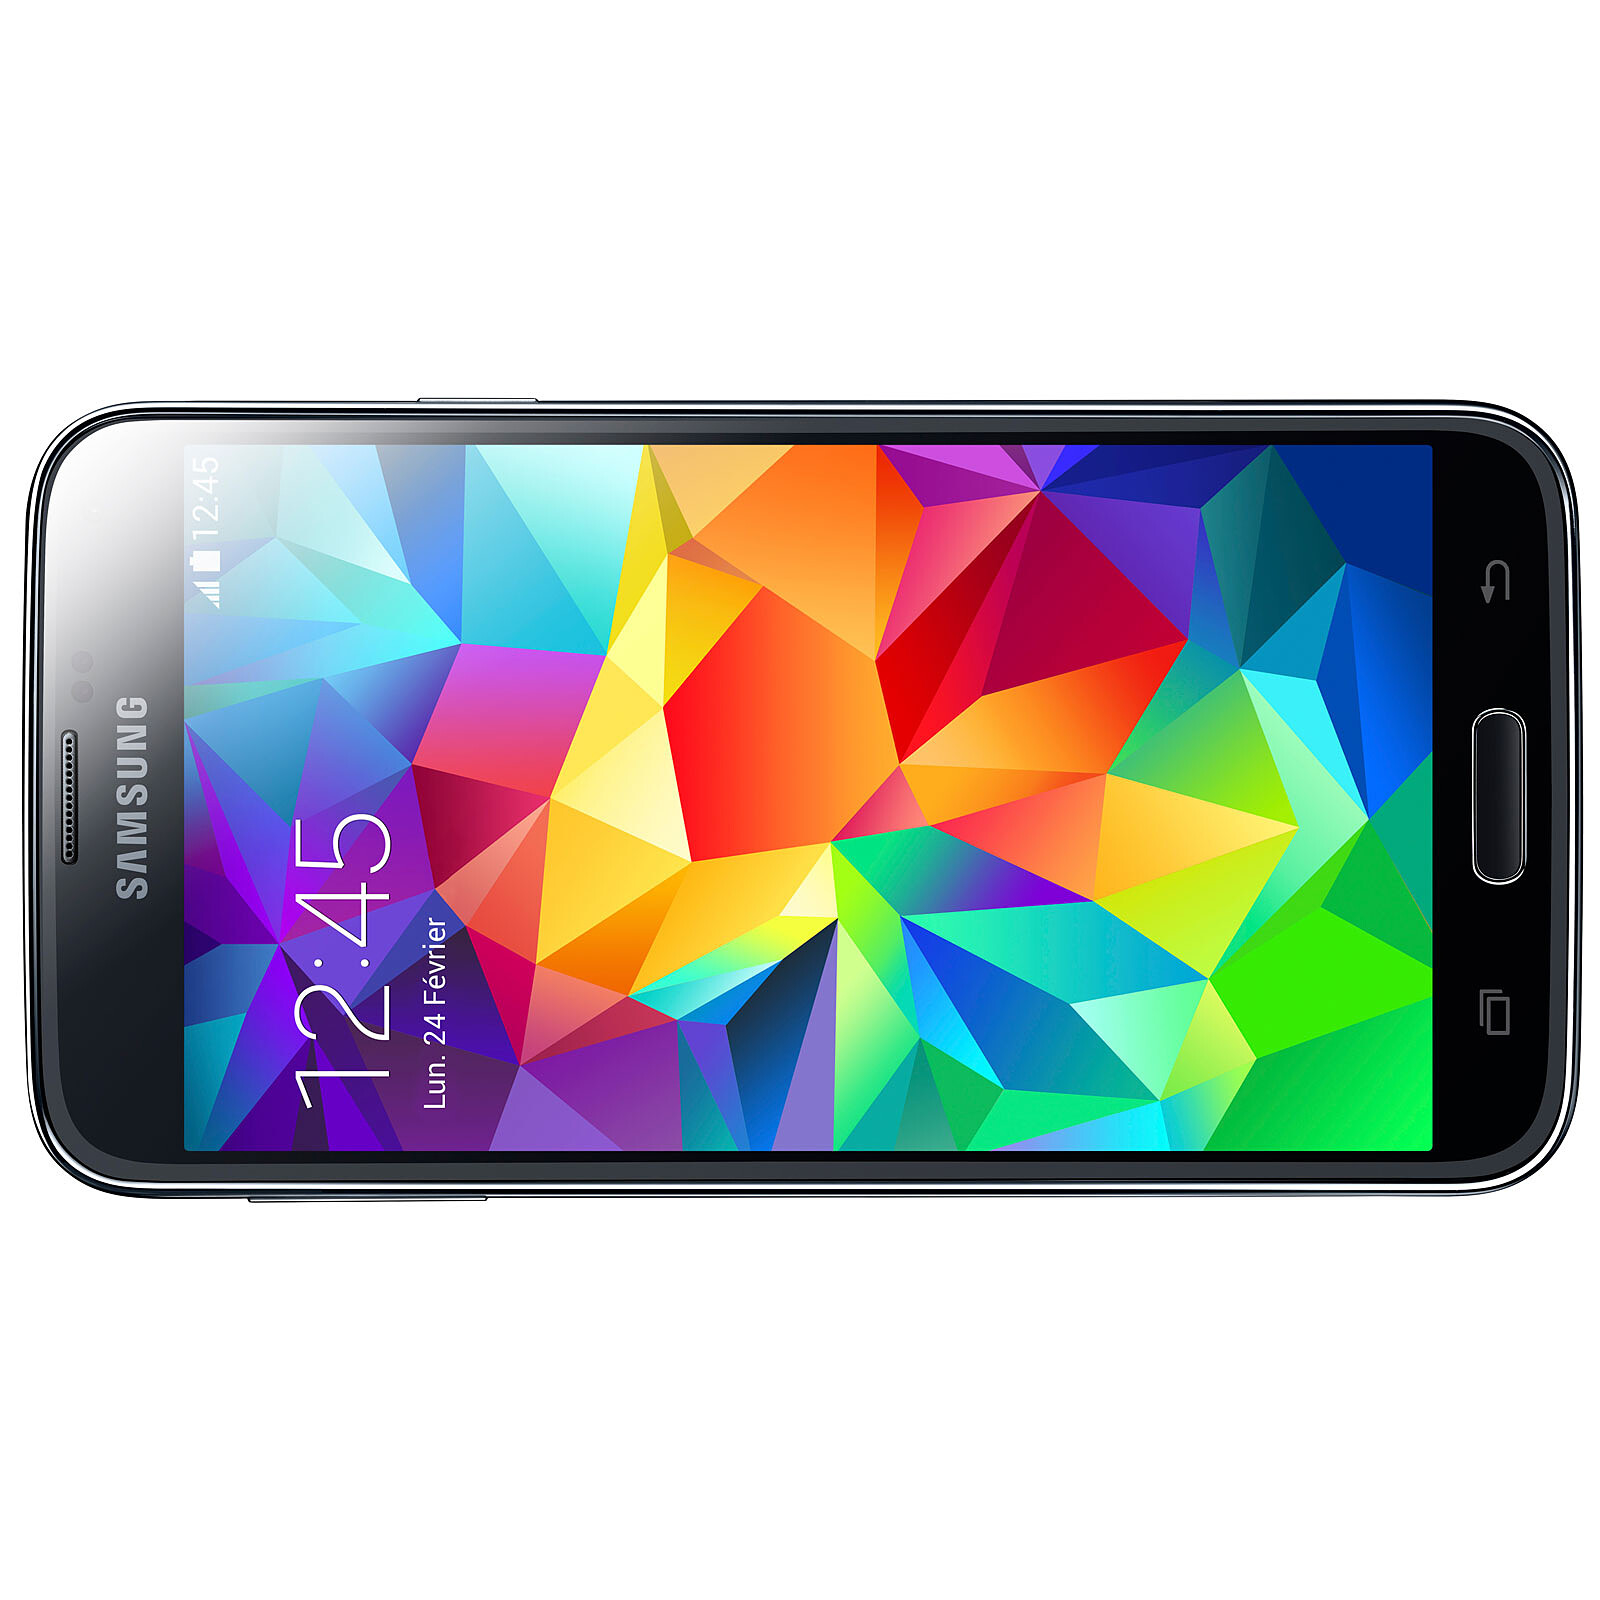 Samsung Galaxy s5 g900f. Samsung s5 SM g900f. Samsung Galaxy s5 SM-g900f. Samsung Galaxy s5 g900f 16gb. Samsung galaxy s5 sm